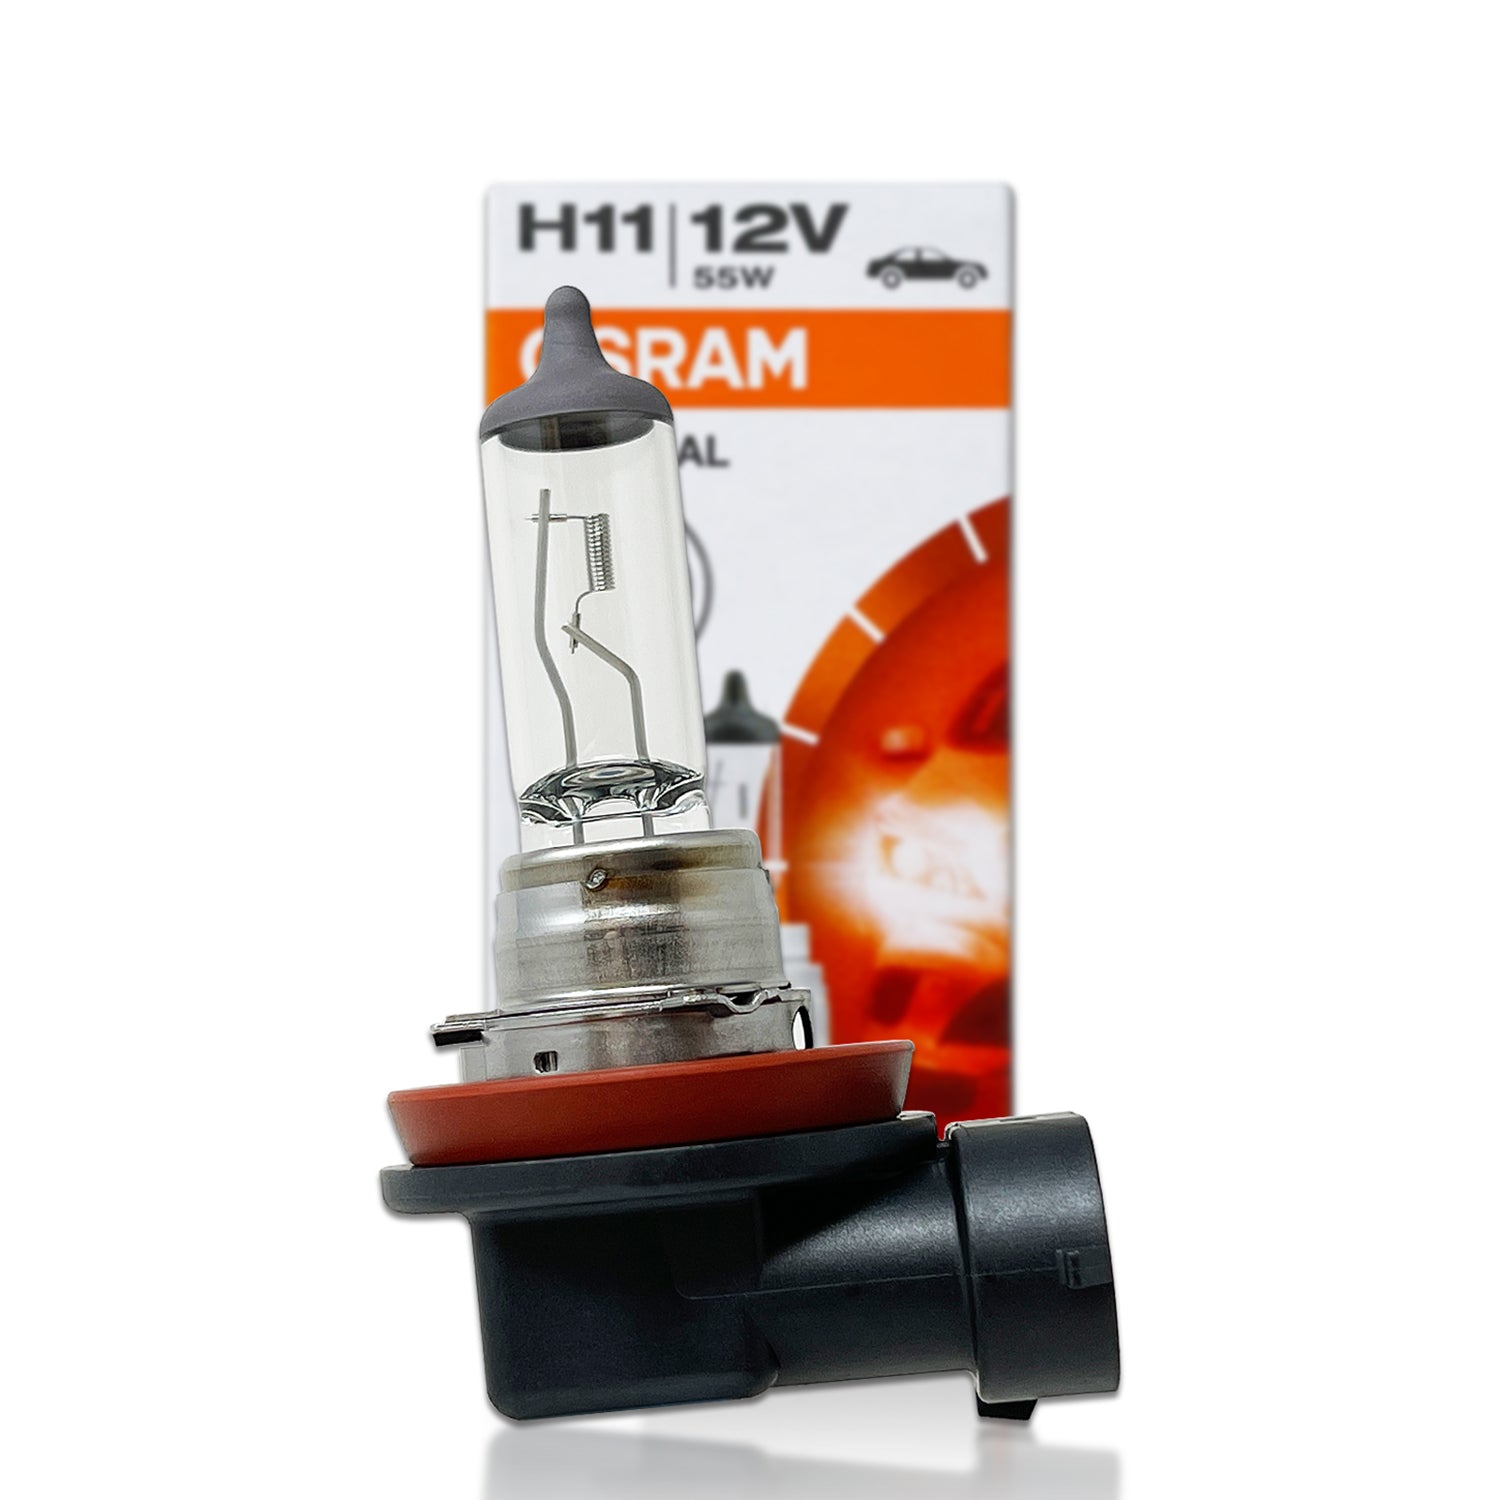 OSRAM, SYLVANIA Long-Life Halogen Headlight Bulb - 64211L, H11 